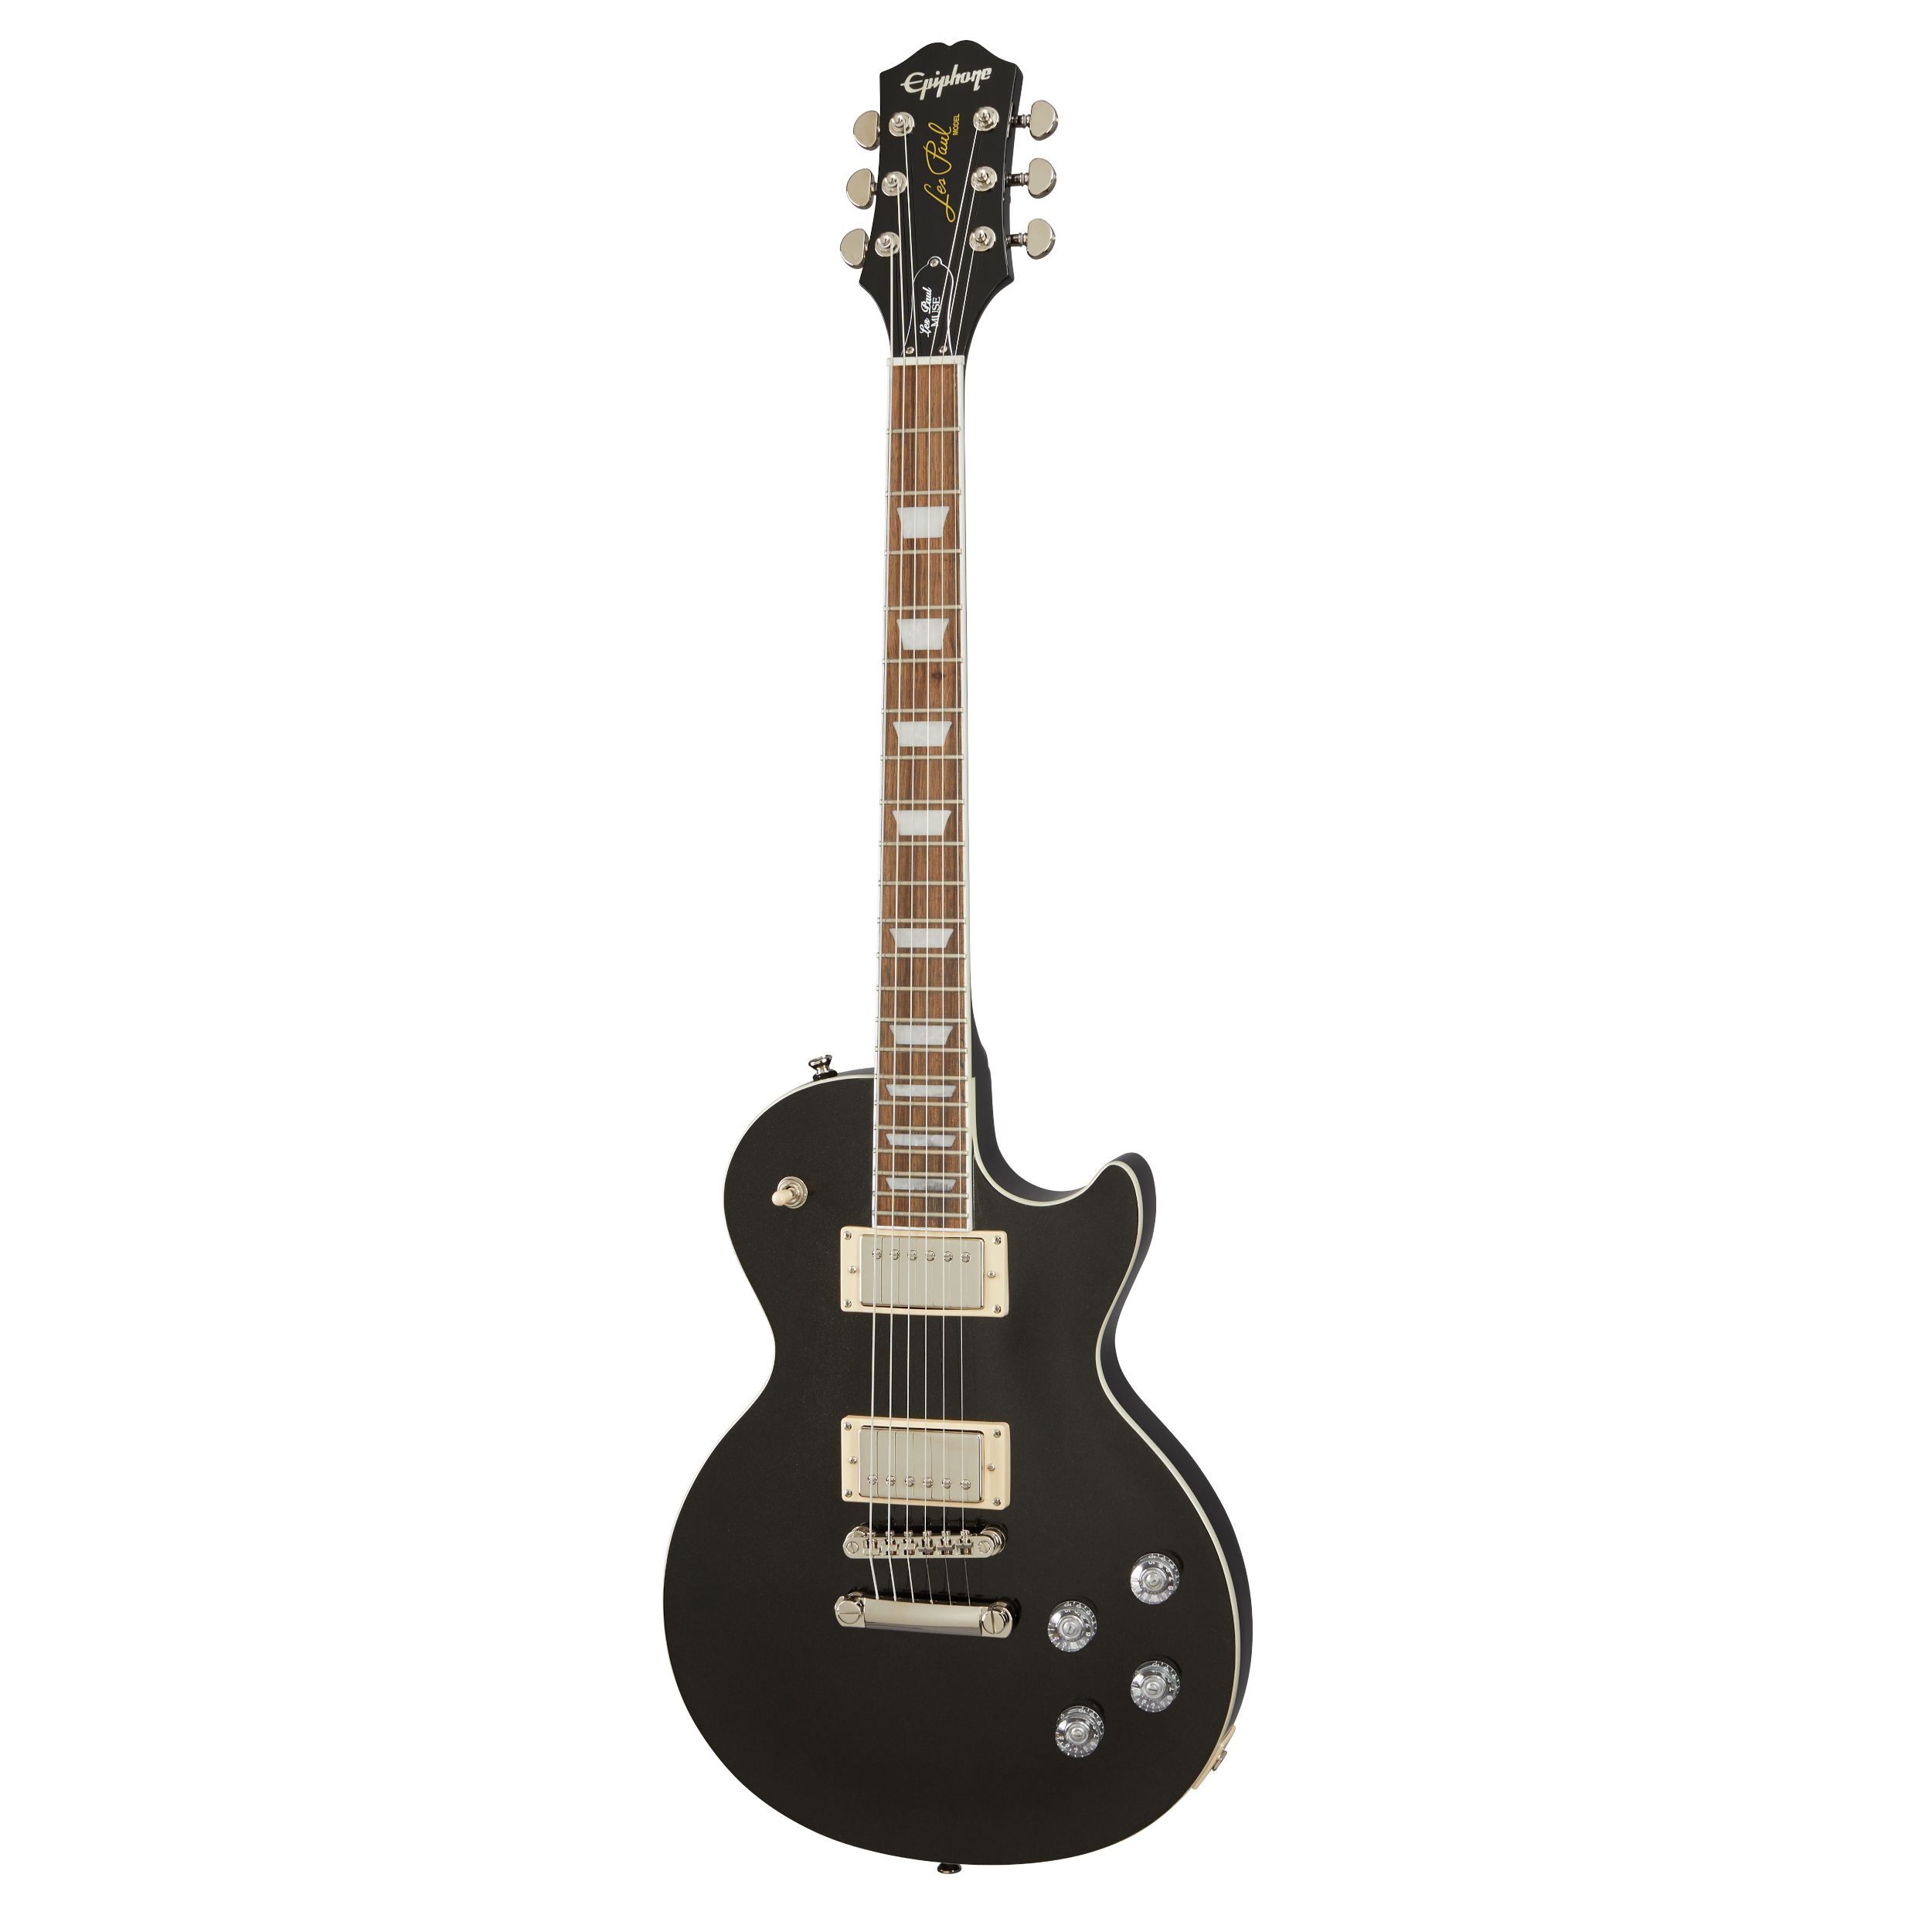 Epiphone Les Paul Muse - Jet Black Metallic Guitar